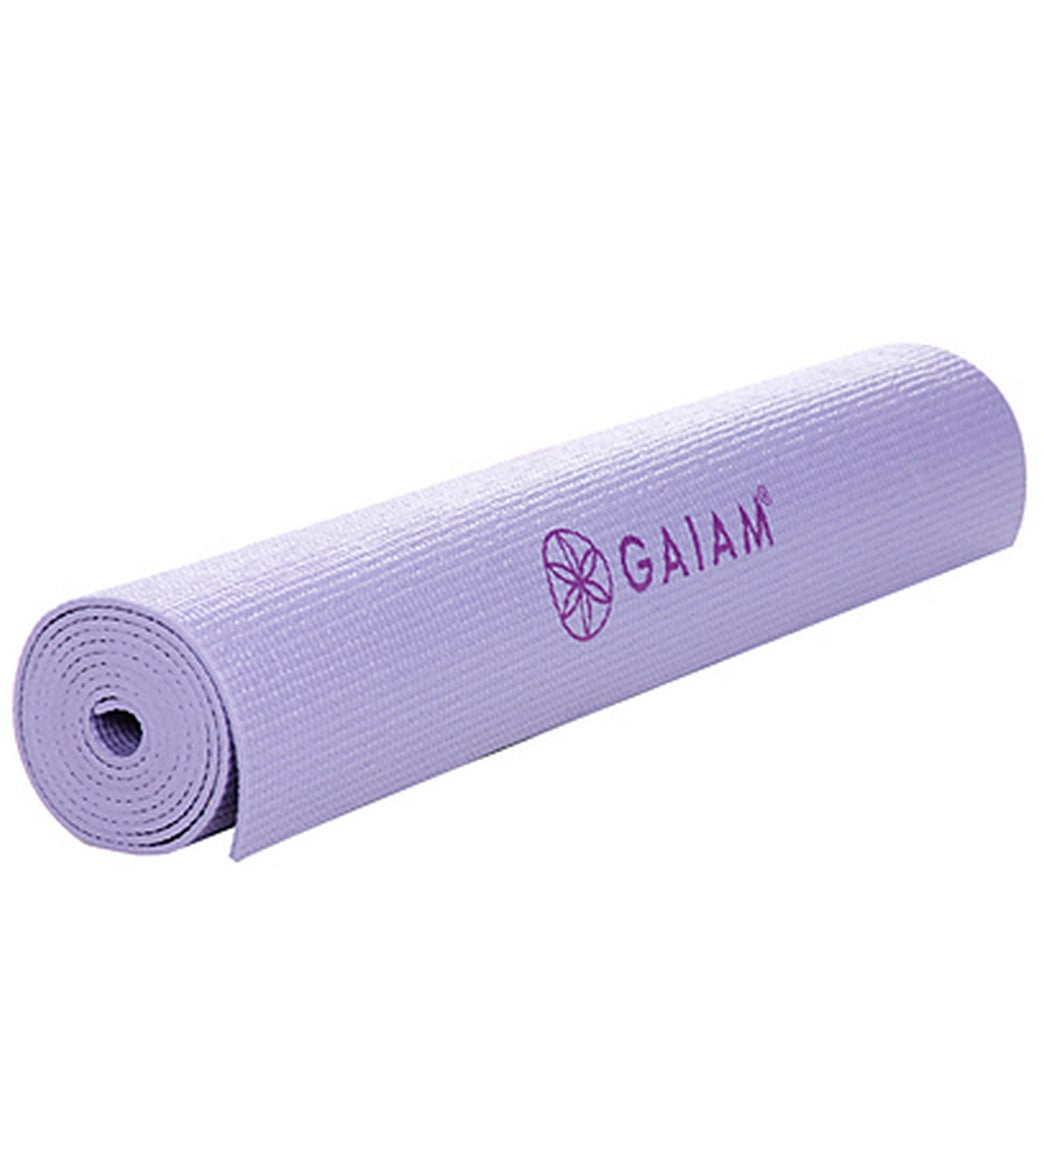 Gaiam Health Products